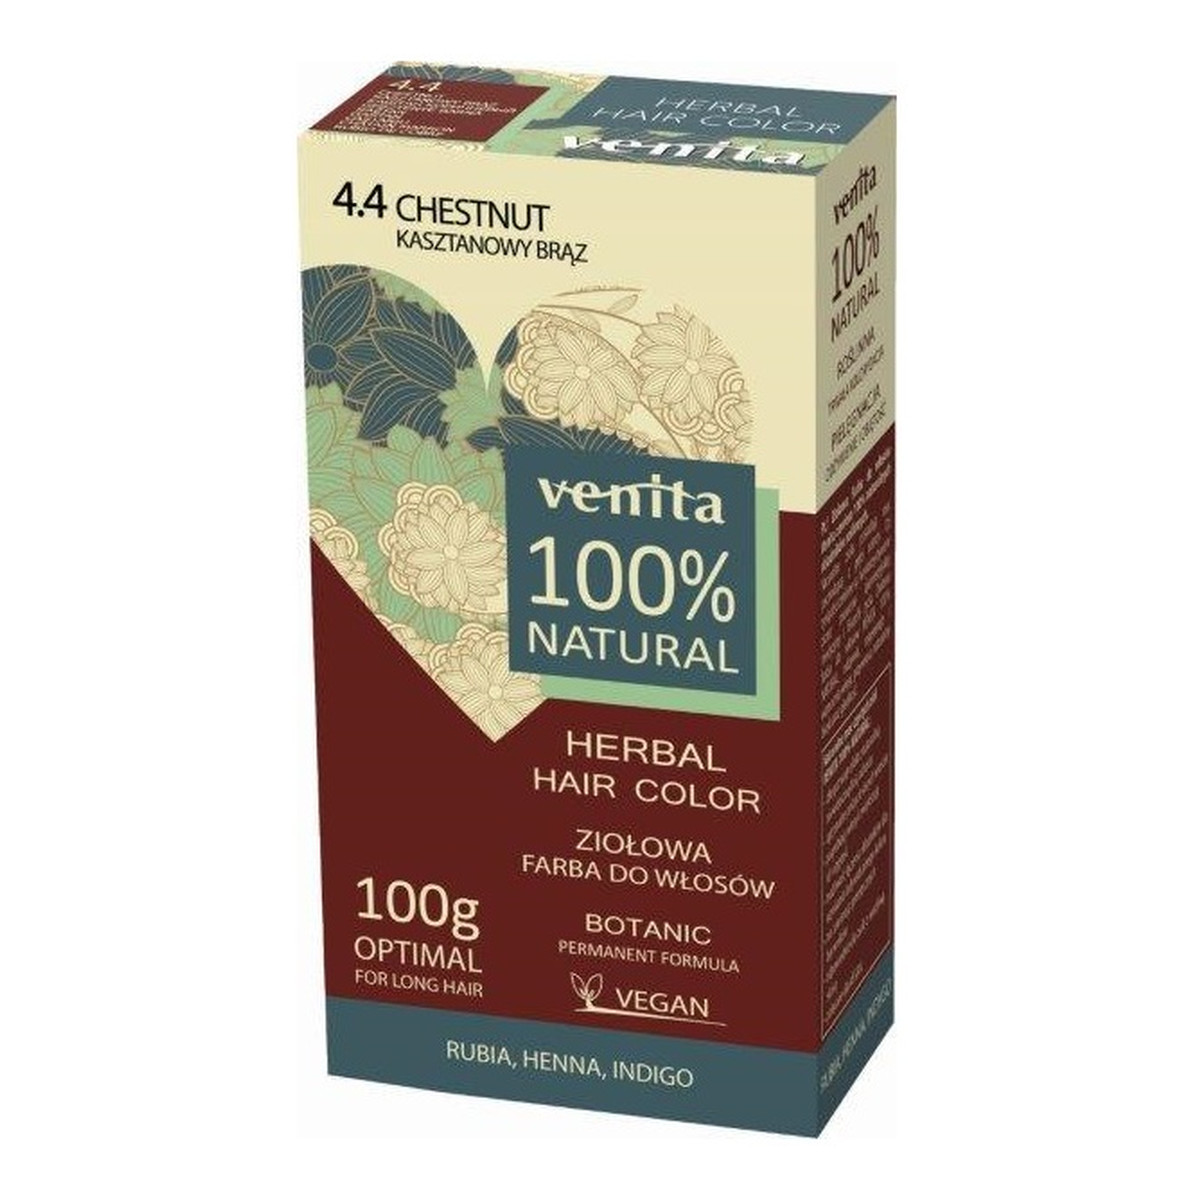 Venita Herbal Hair Color Ziołowa farba do włosów 100g